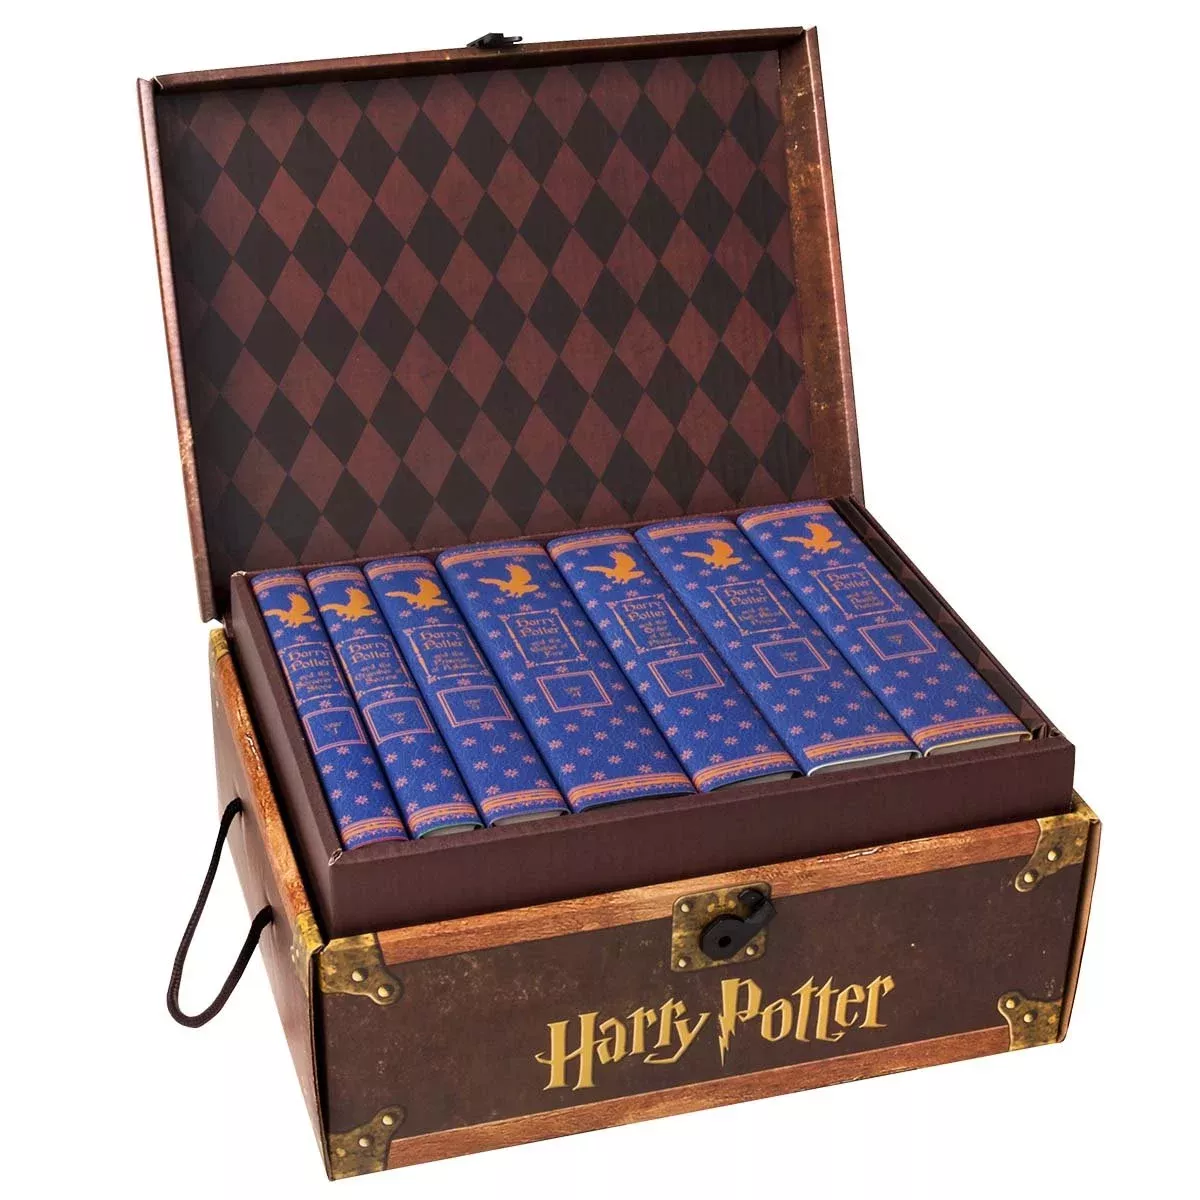 Best Nerd Gifts 2023: Harry Potter Duster Book Set for Geek 2023